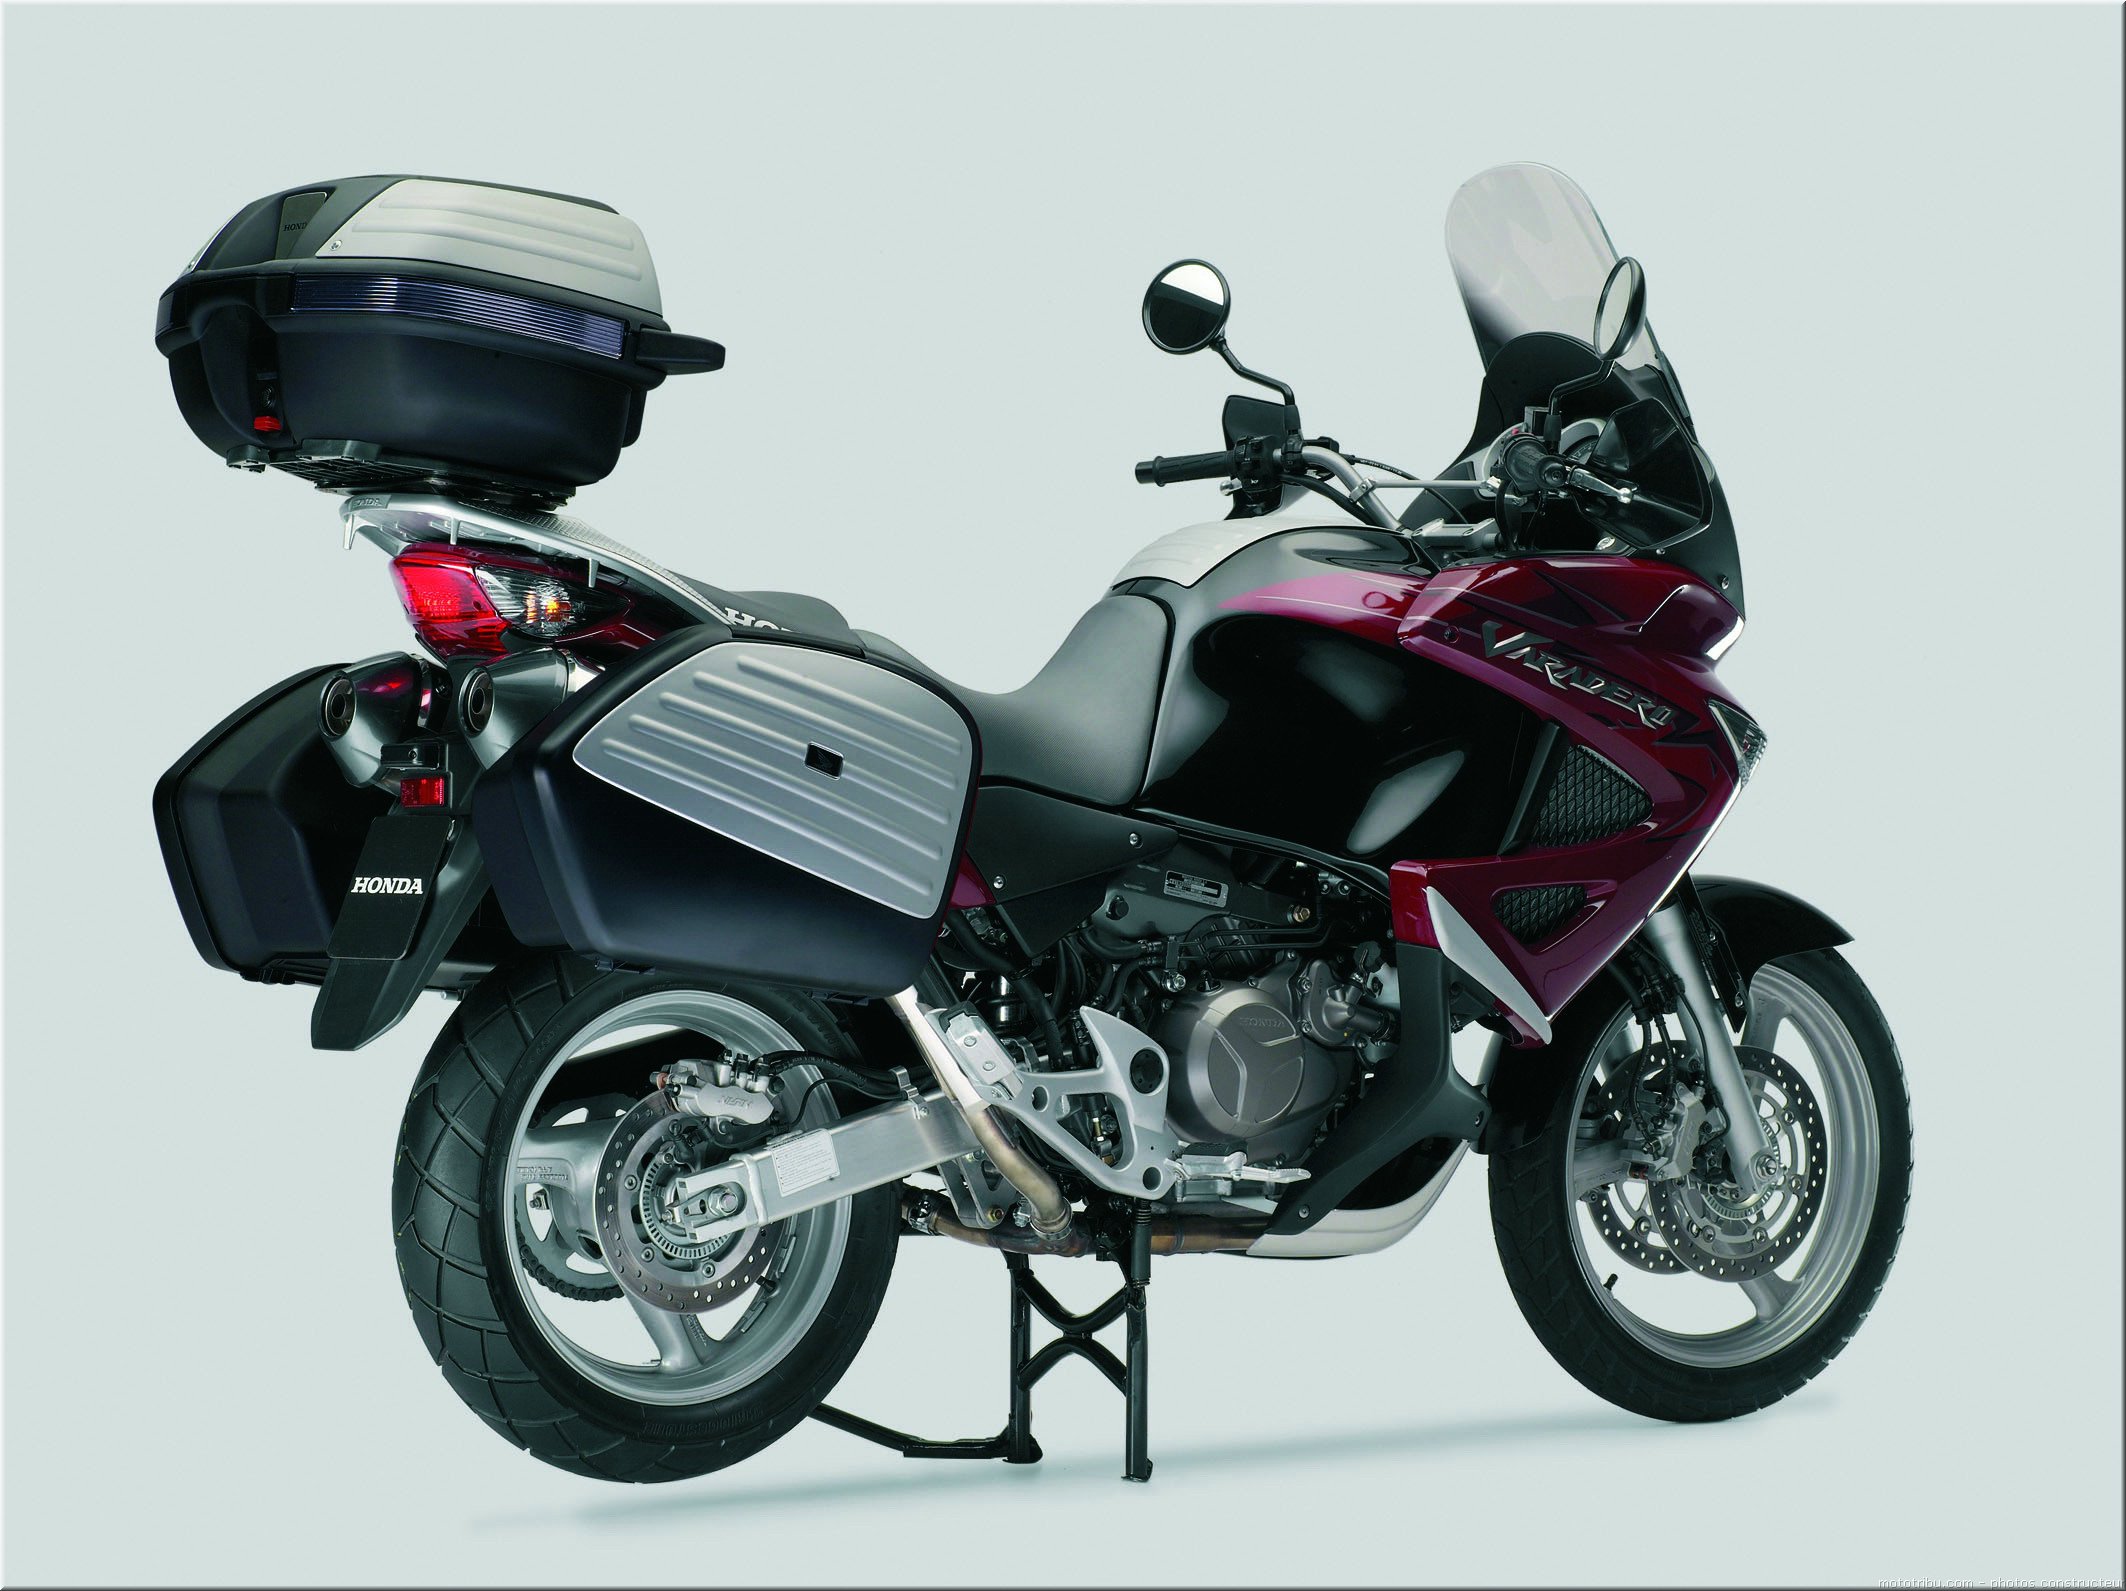 Обзор мотоцикла honda xl 1000 v varadero — bikeswiki - энциклопедия японских мотоциклов